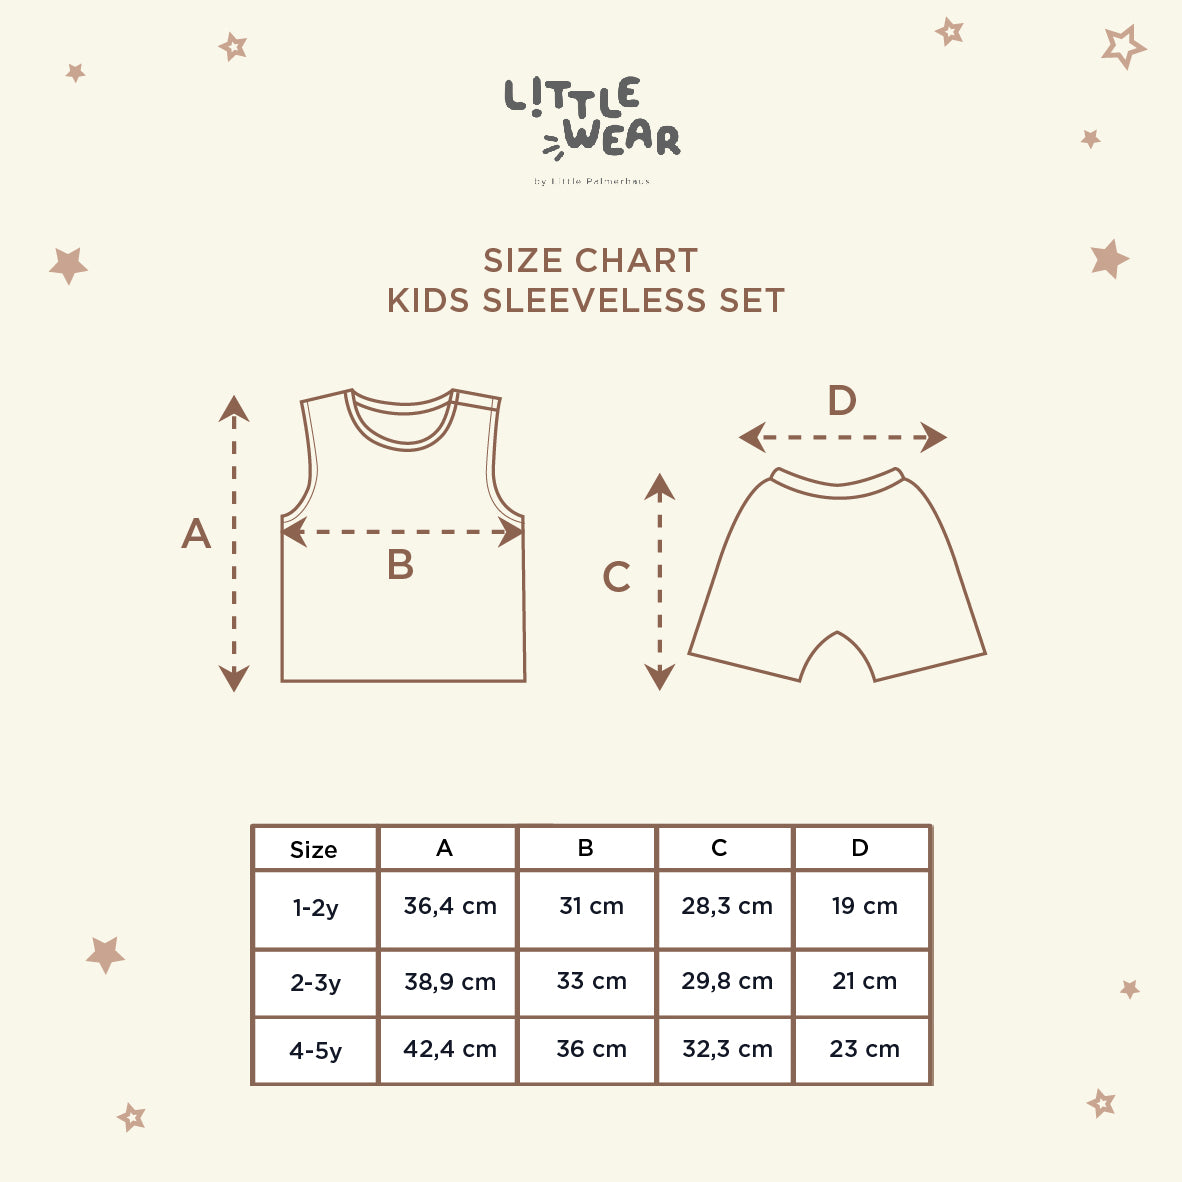 Little Wear Kids Sleeveless Set 21.0